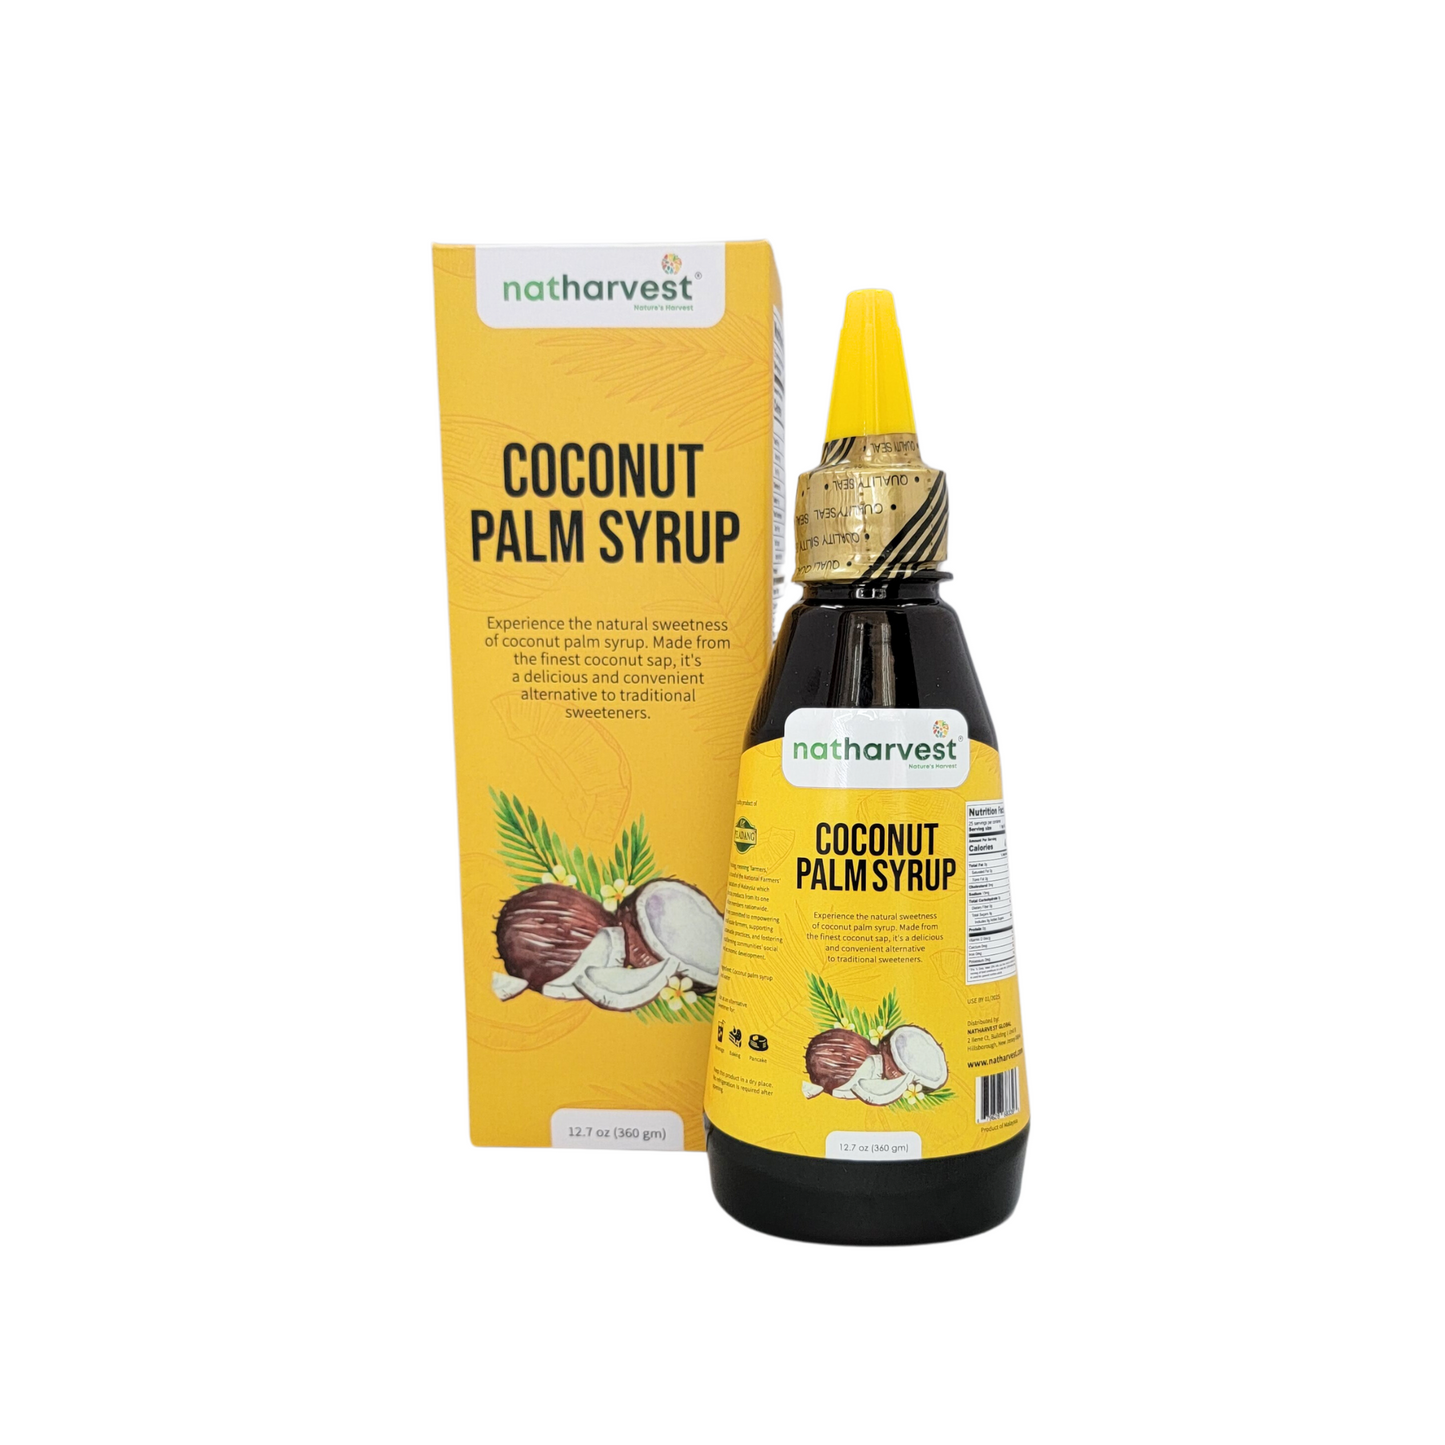 Natharvest Coconut Palm Syrup, 12.6 oz (360 gm)